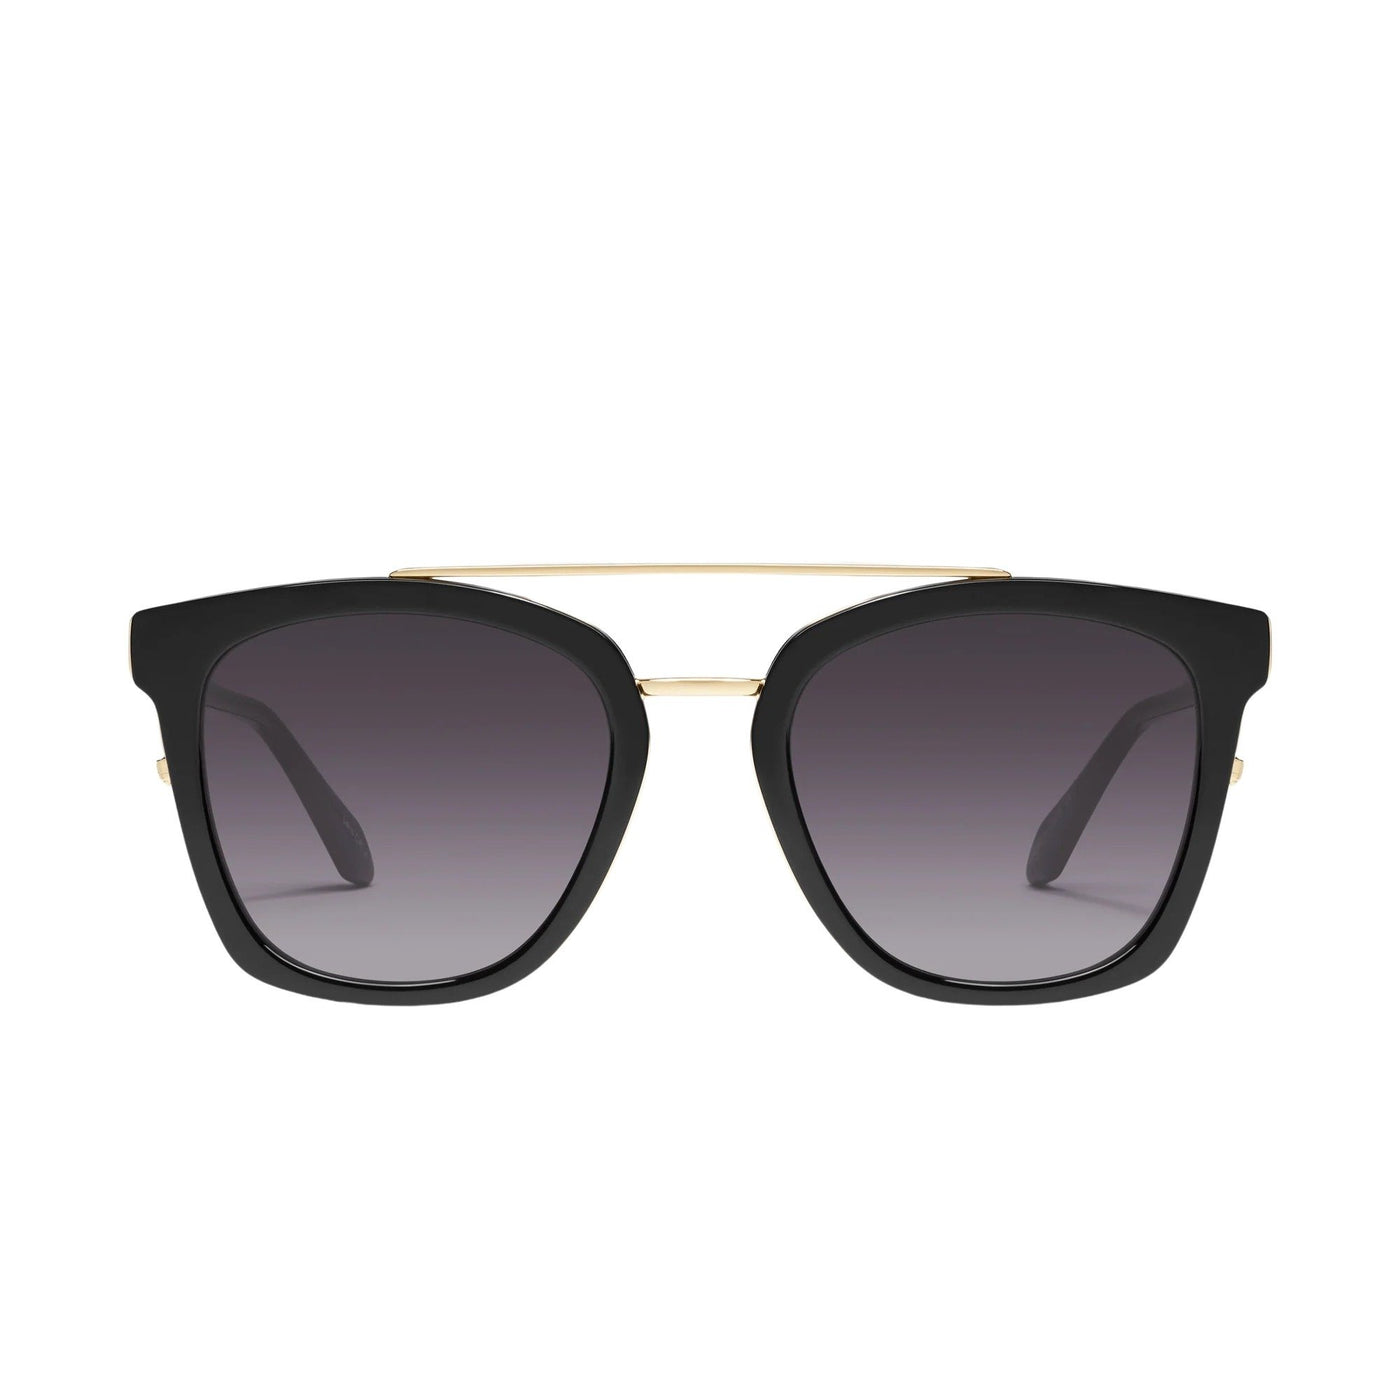 Quay Women's Sweet Dreams Oversized Square Sunglasses (Black Frame/Smoke Lens) - front